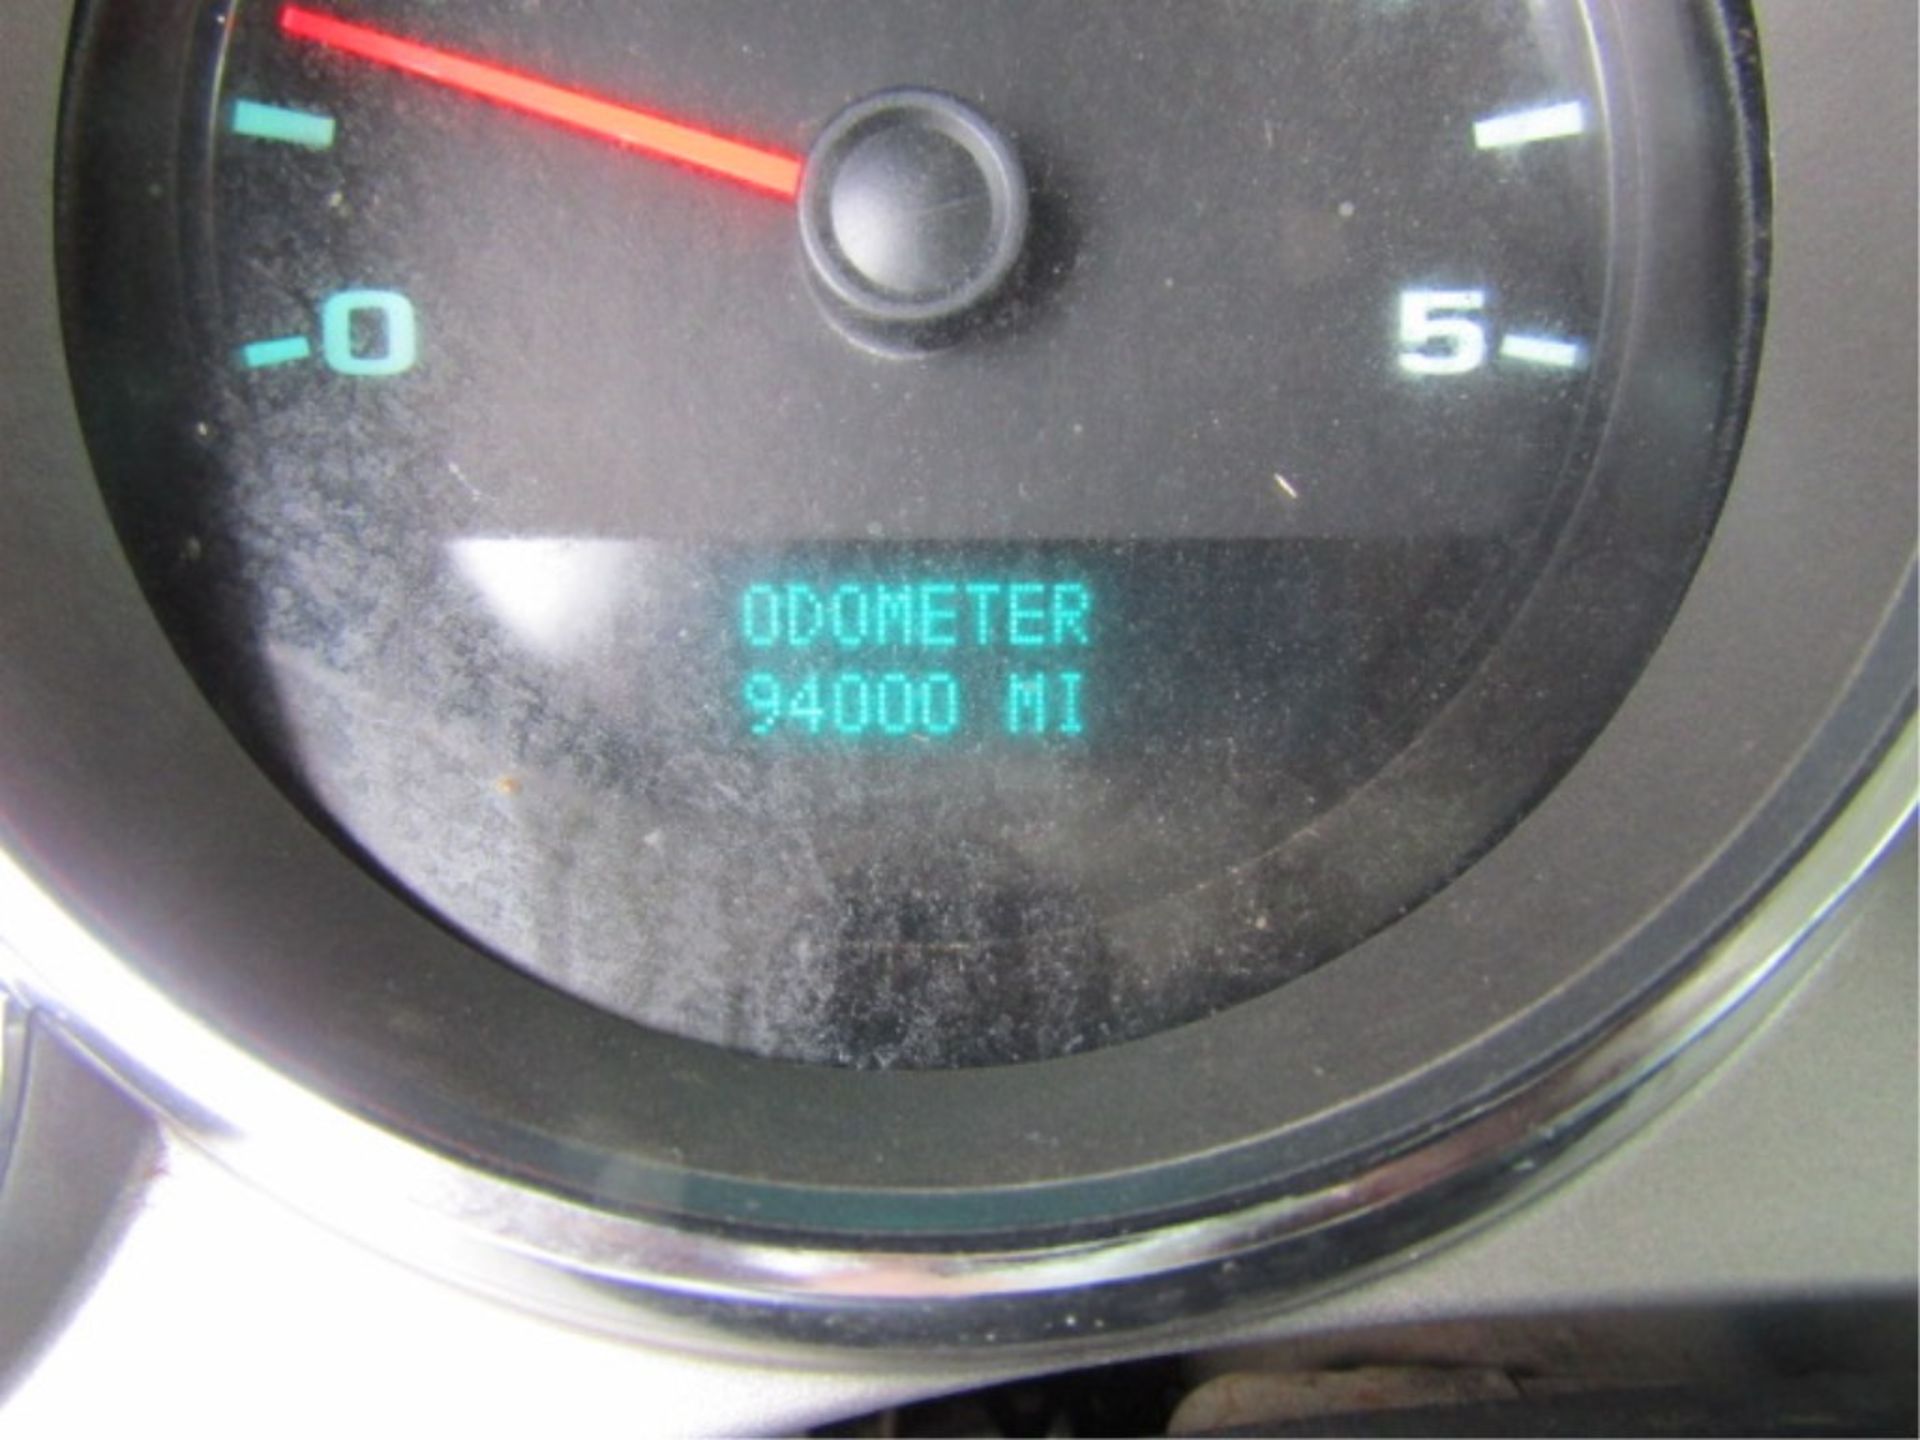 2008 Chevy Silverado K3500HD Crew Cab Utility 4x4, Truck, Vin # 1GBJK39628E217401, Allison Automatic - Image 7 of 27